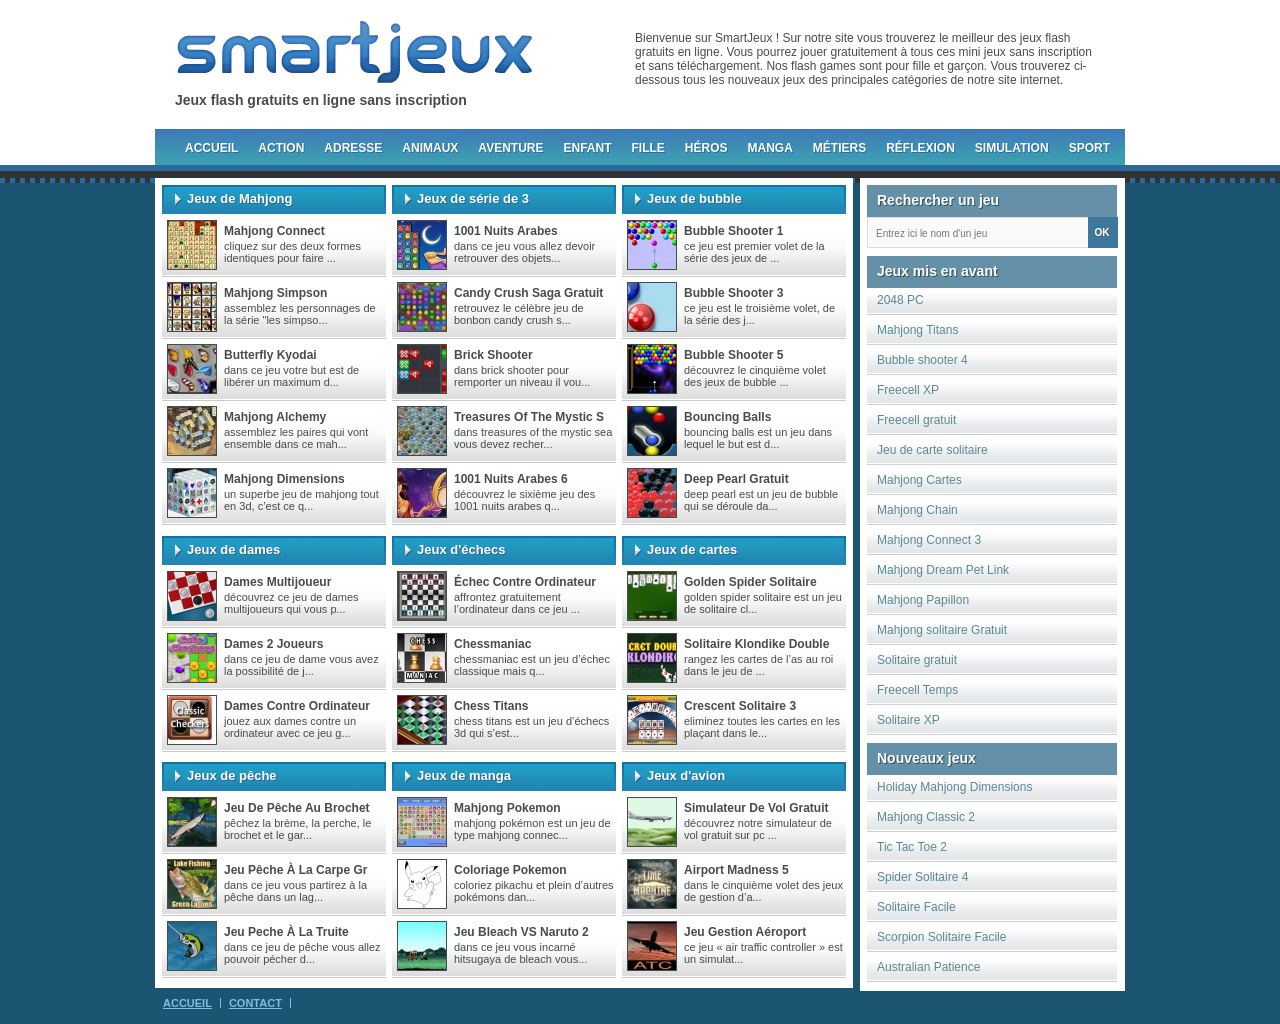 www.smartjeux.com